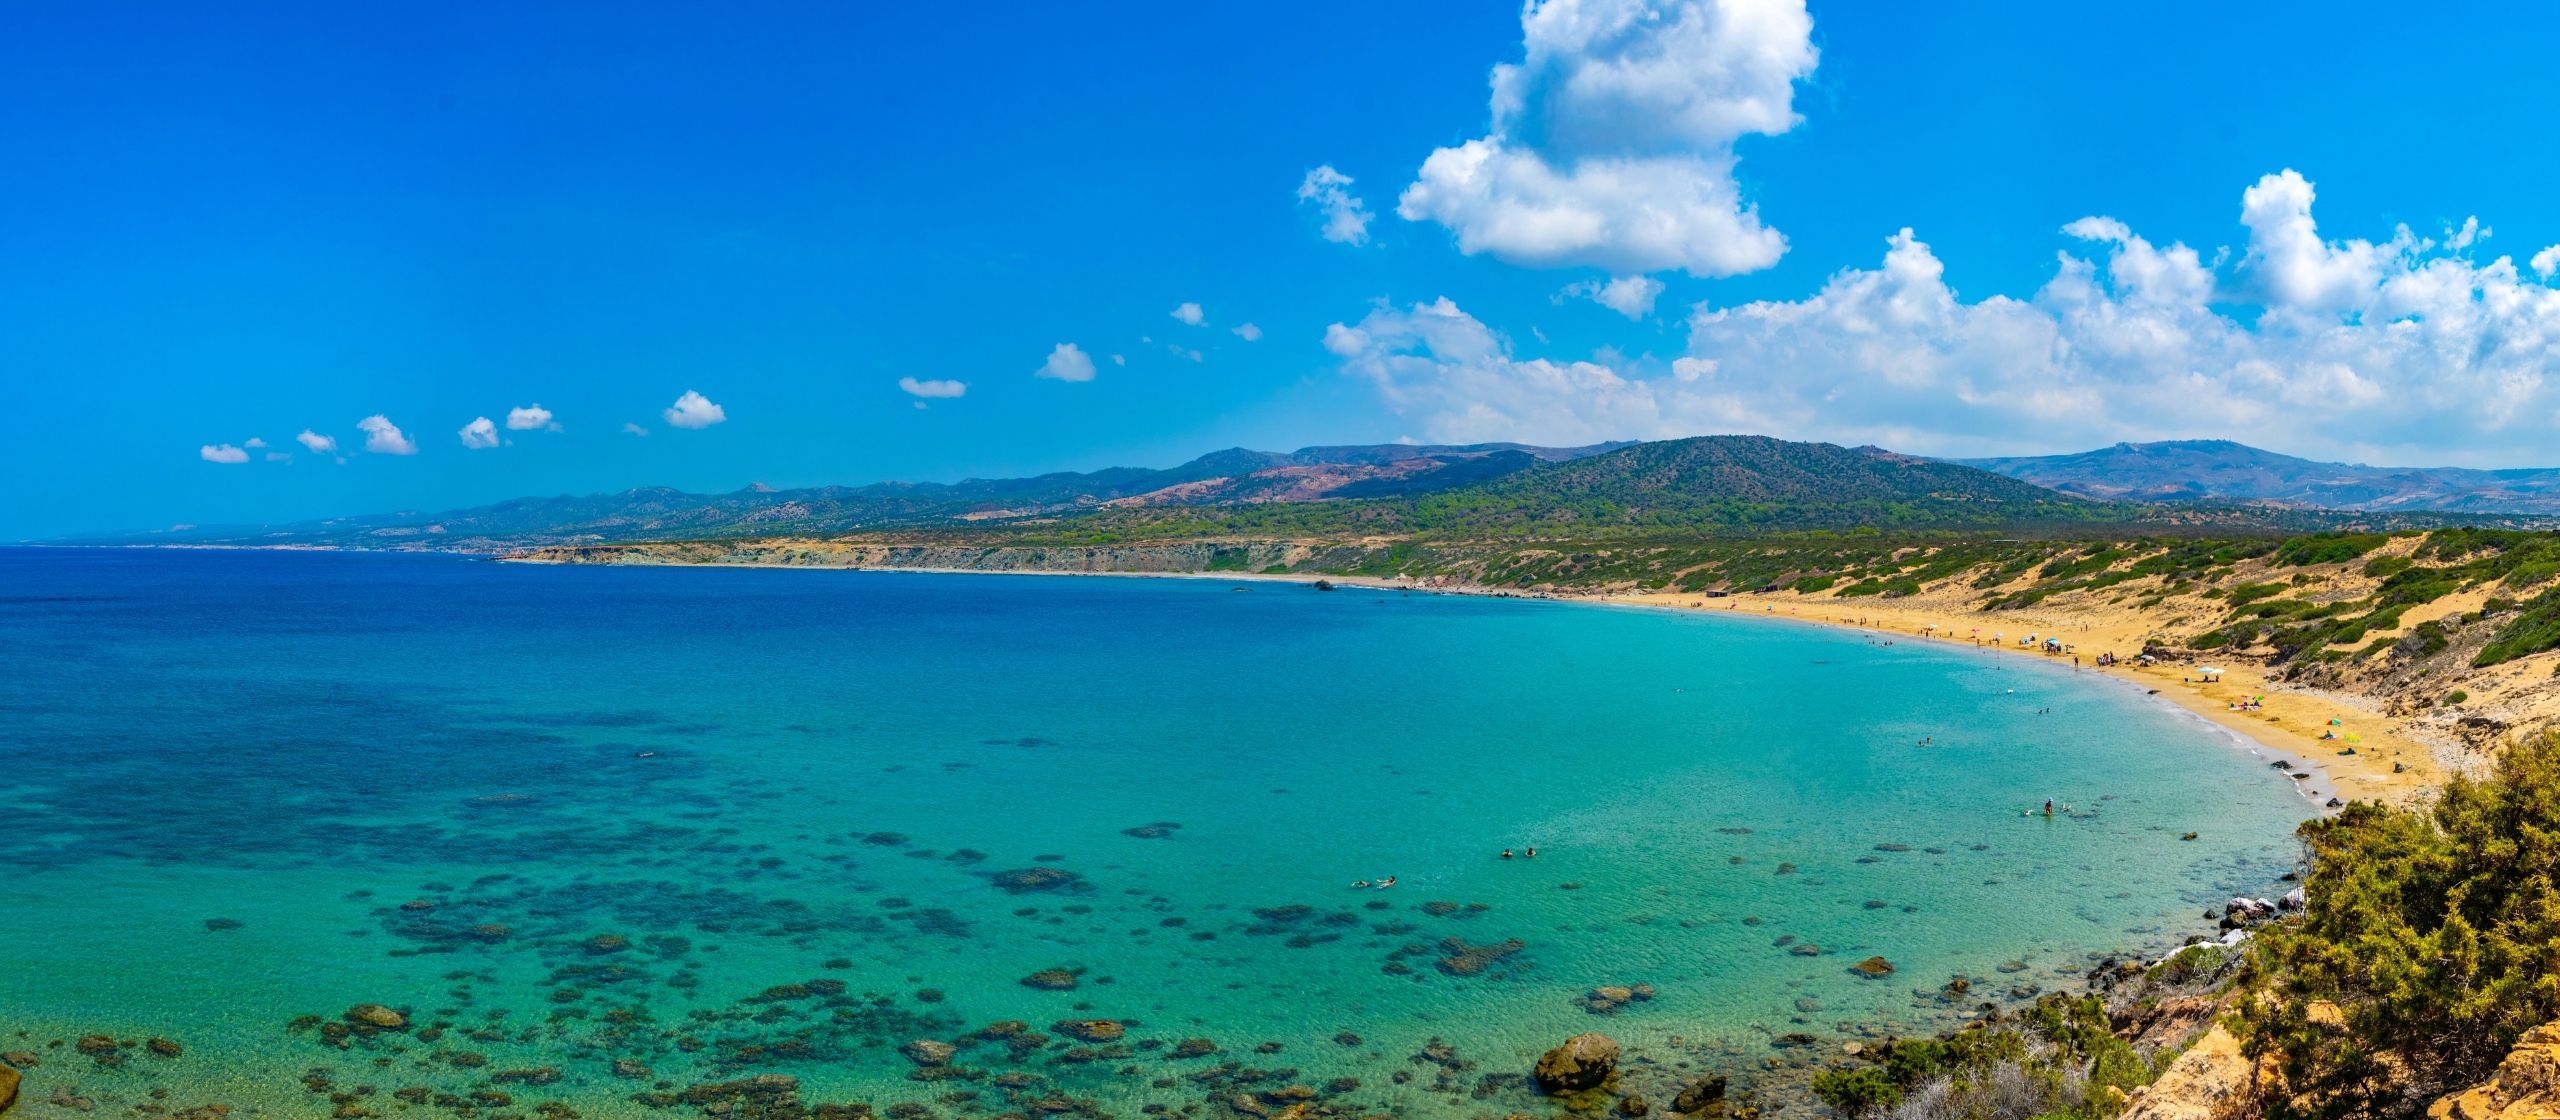 Lara Beach in Cyprus